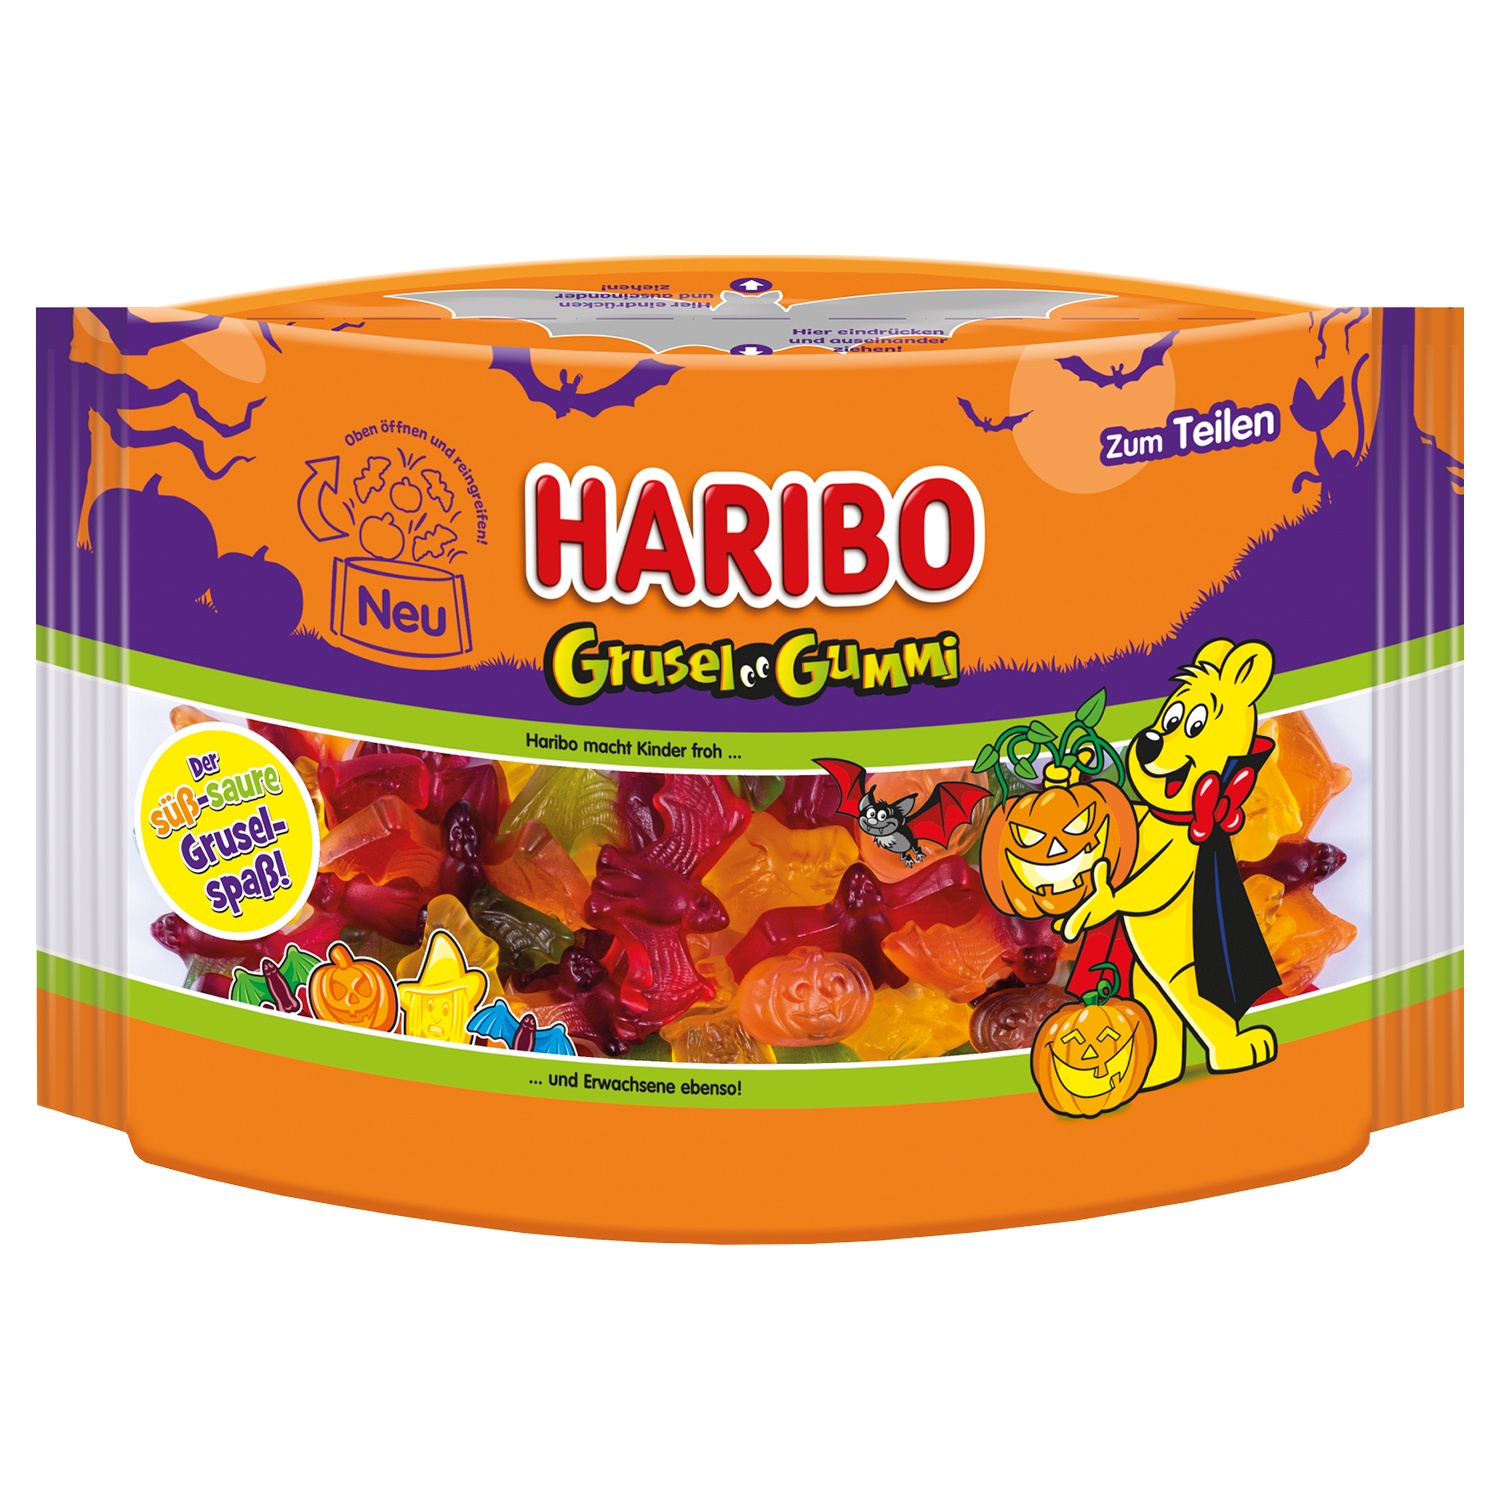 HARIBO Grusel Gummi 450g